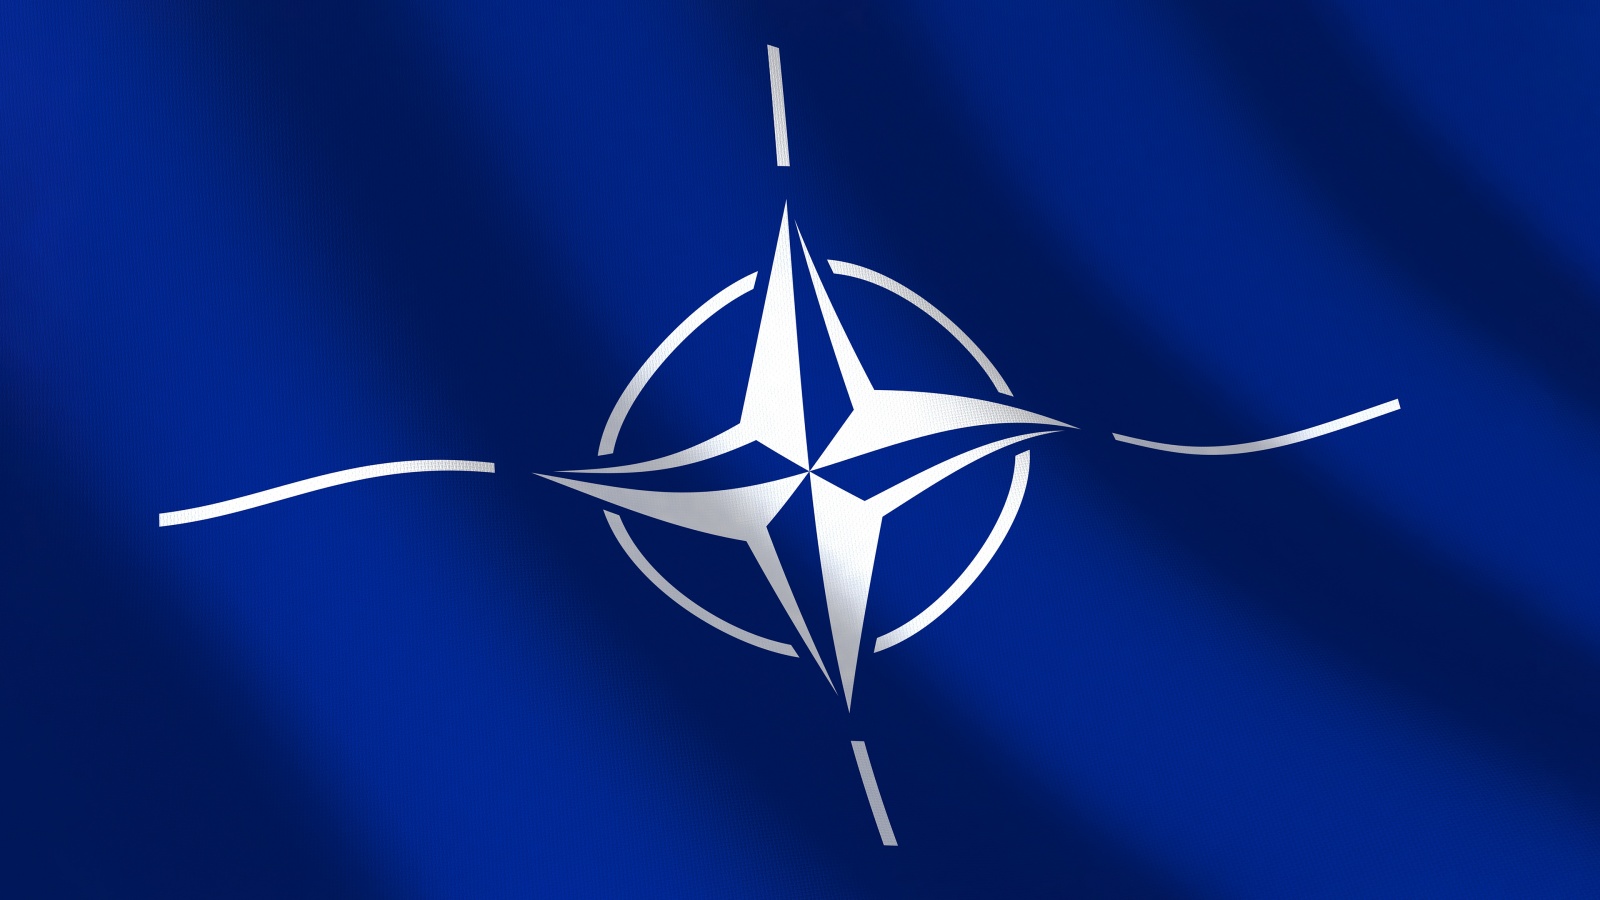 NATO Razboiul Ucraina Dura Cativa Ani Zile